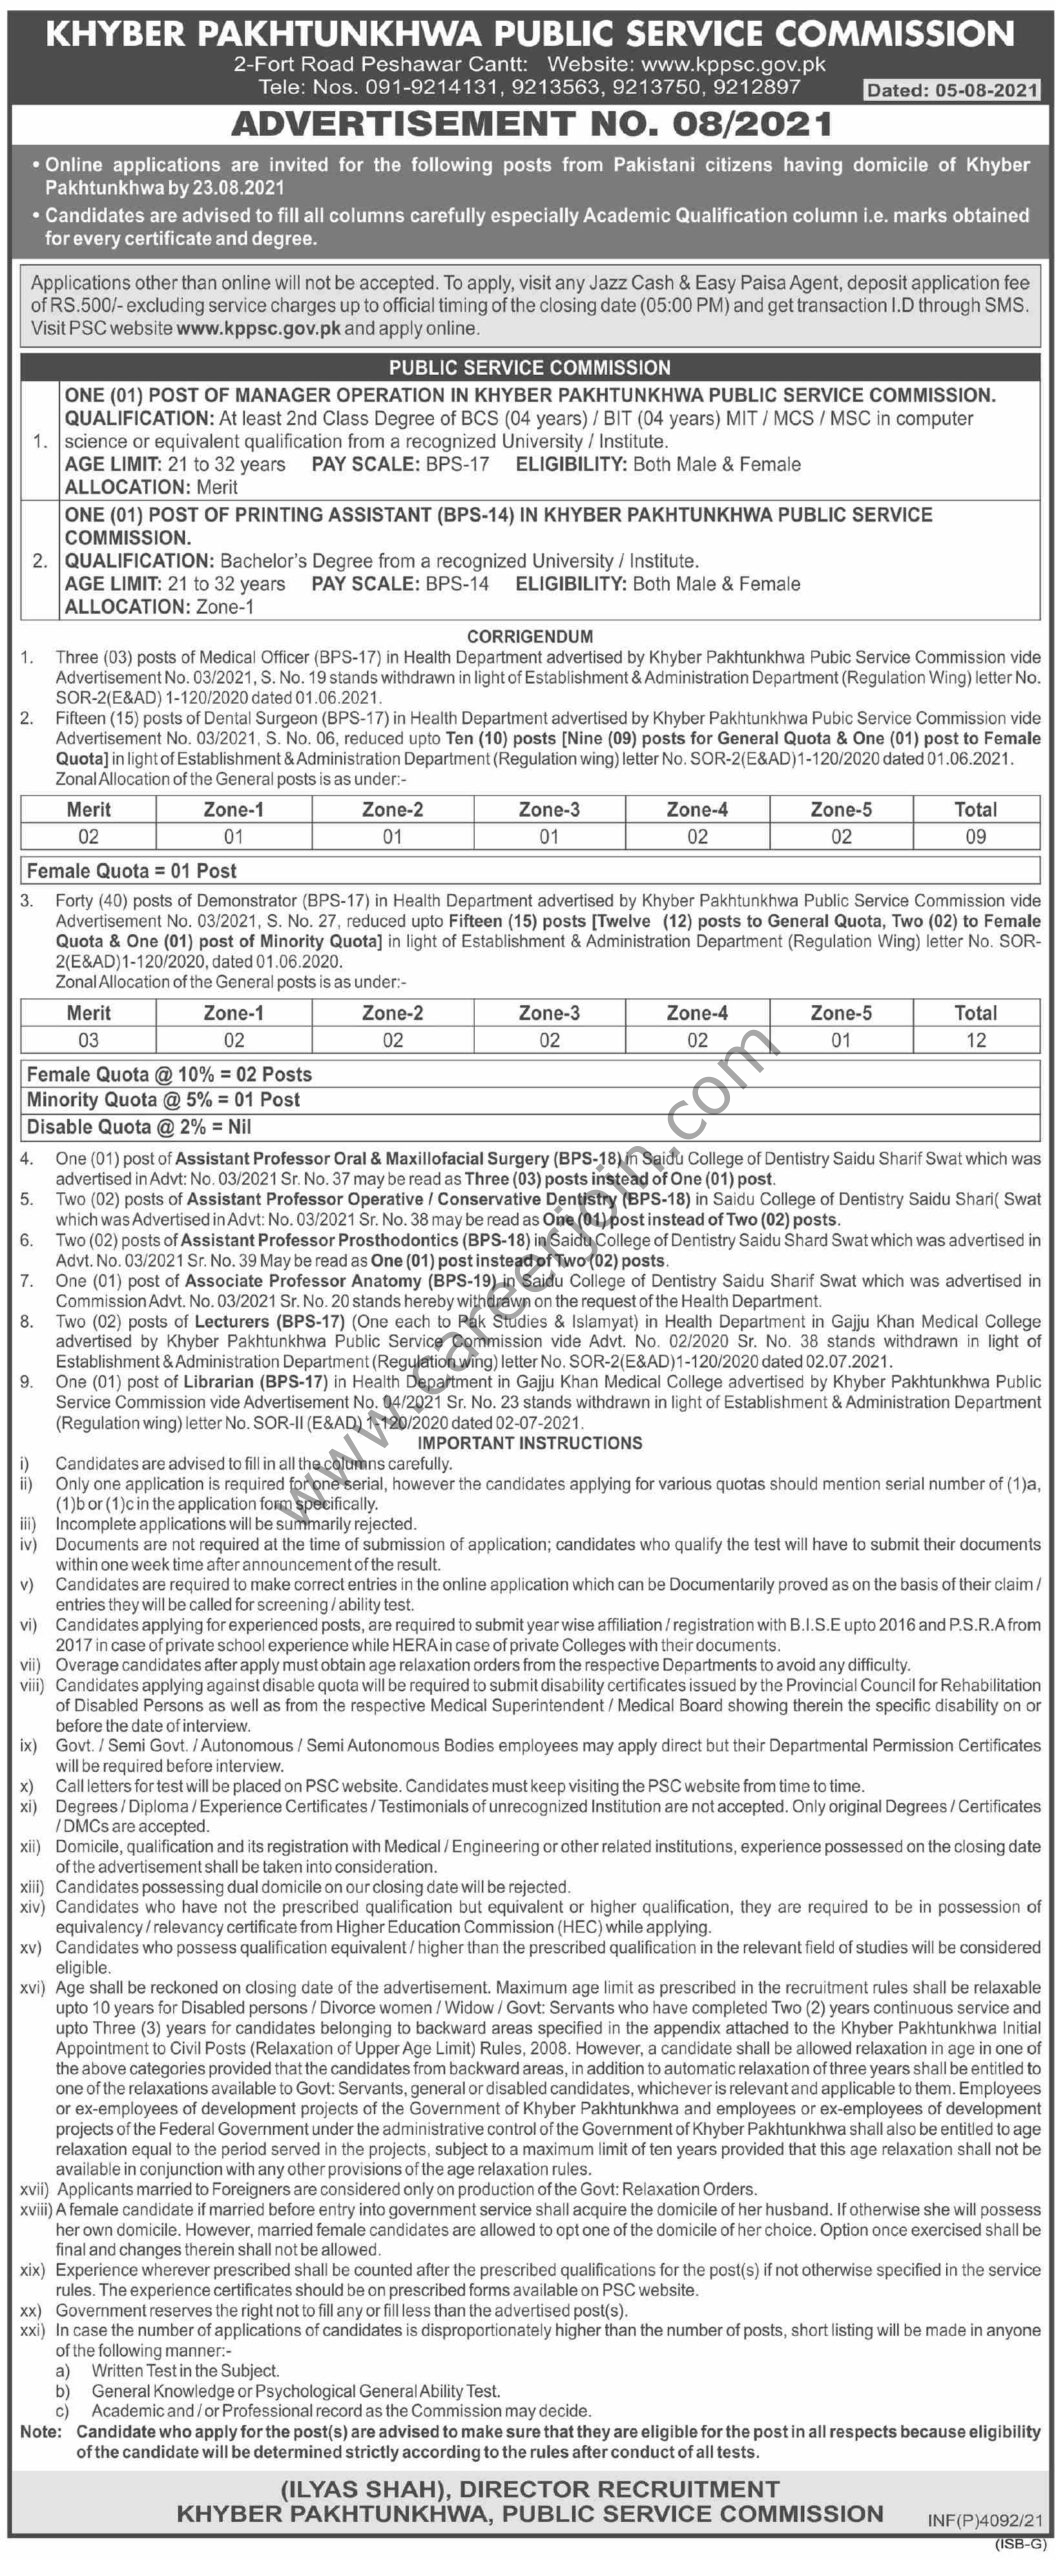 Khyber Pakhtunkhwa Public Service Commission KPPSC Jobs August 2021